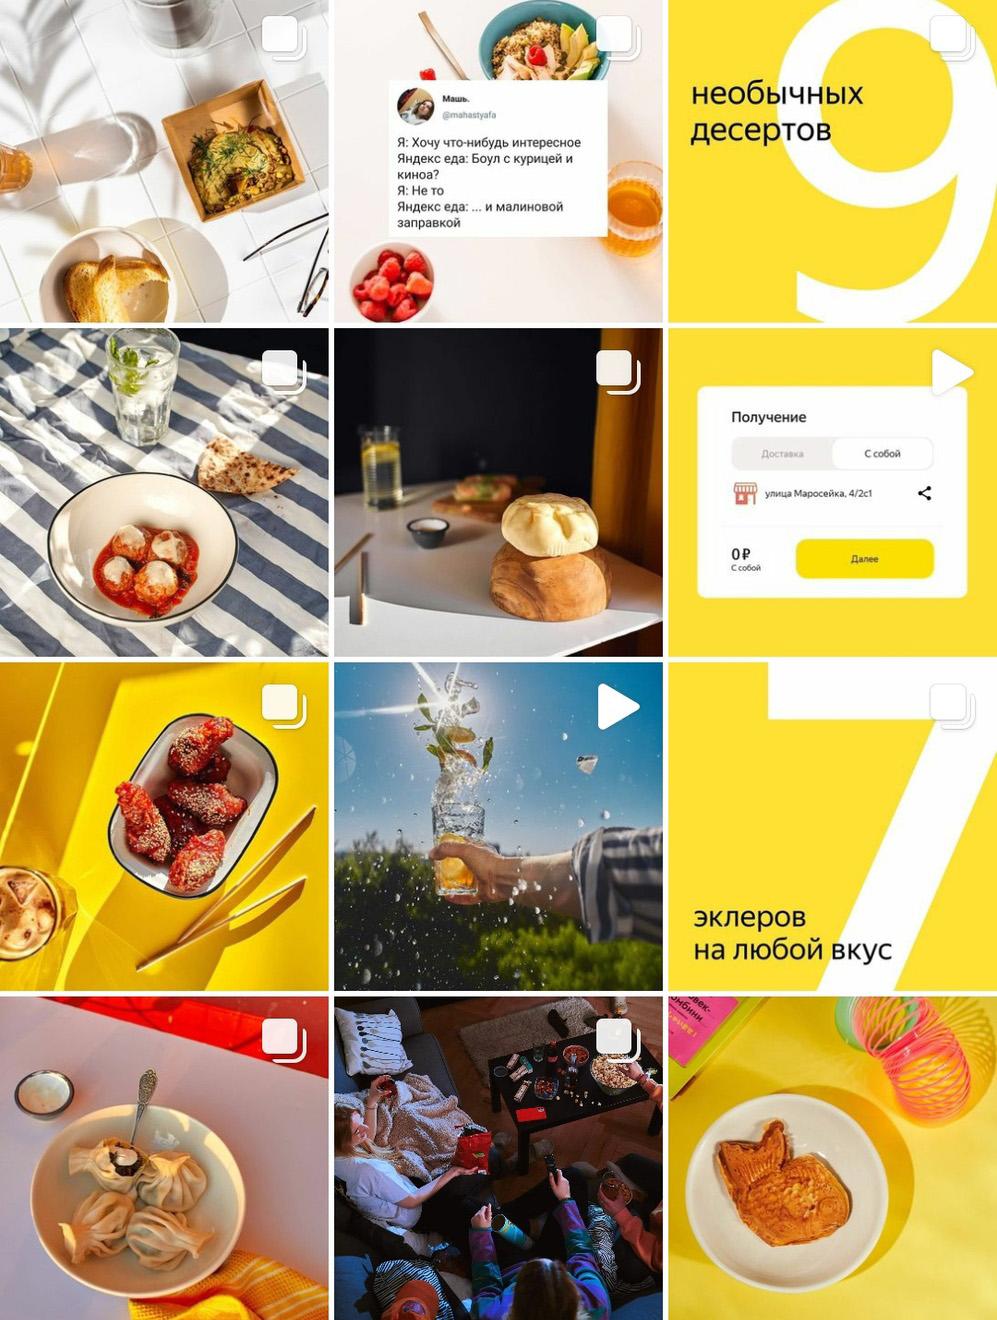 Так оформлен профиль сервиса доставки «Яндекс.Еда»